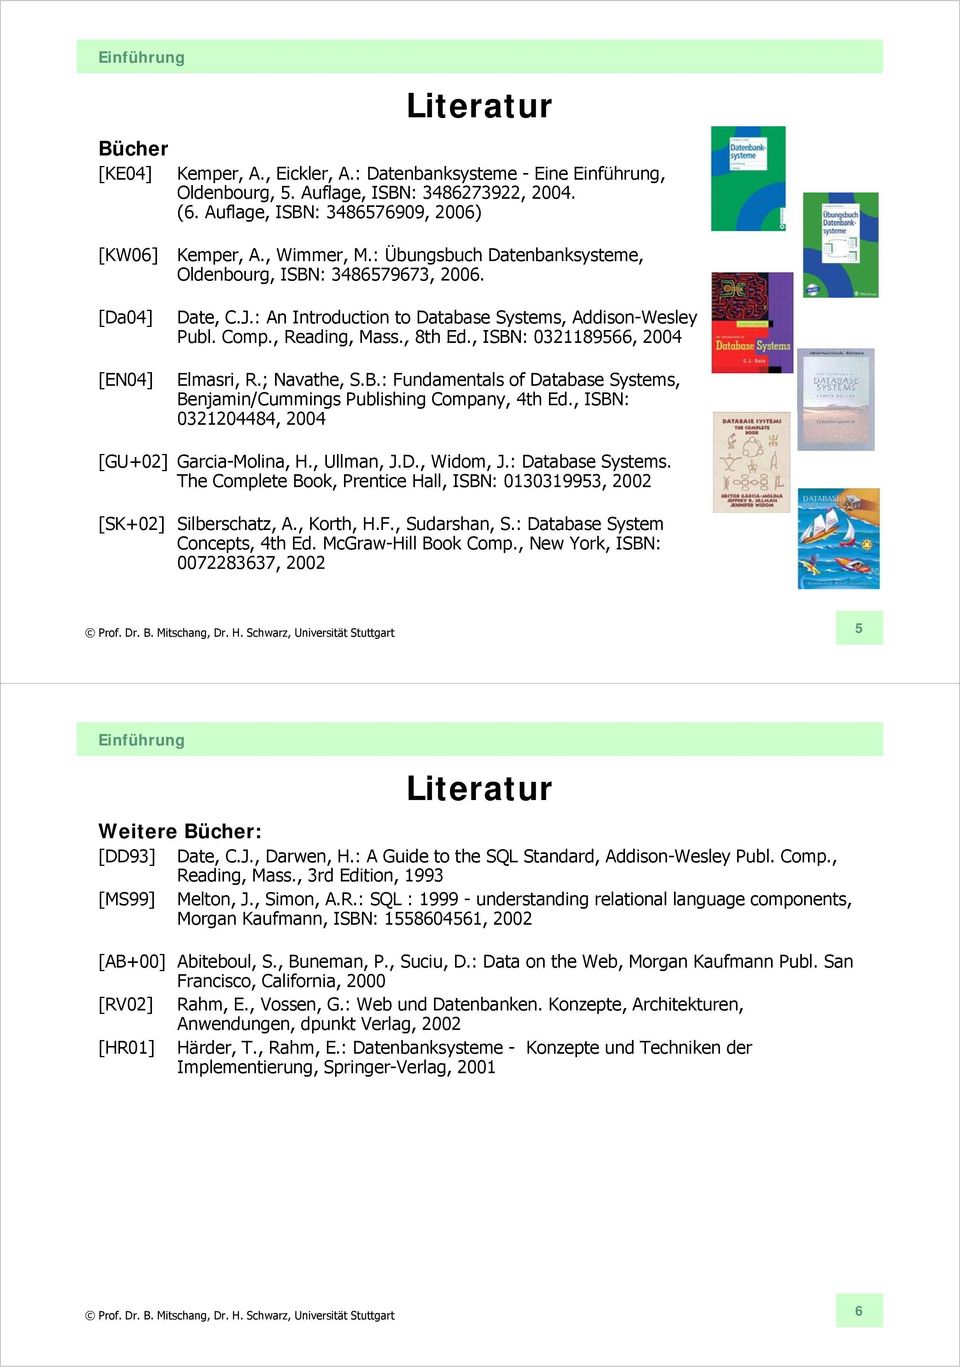 , ISBN: 0321189566, 2004 Elmasri, R.; Navathe, S.B.: Fundamentals of Database Systems, Benjamin/Cummings Publishing Company, 4th Ed., ISBN: 0321204484, 2004 [GU+02] Garcia-Molina, H., Ullman, J.D., Widom, J.